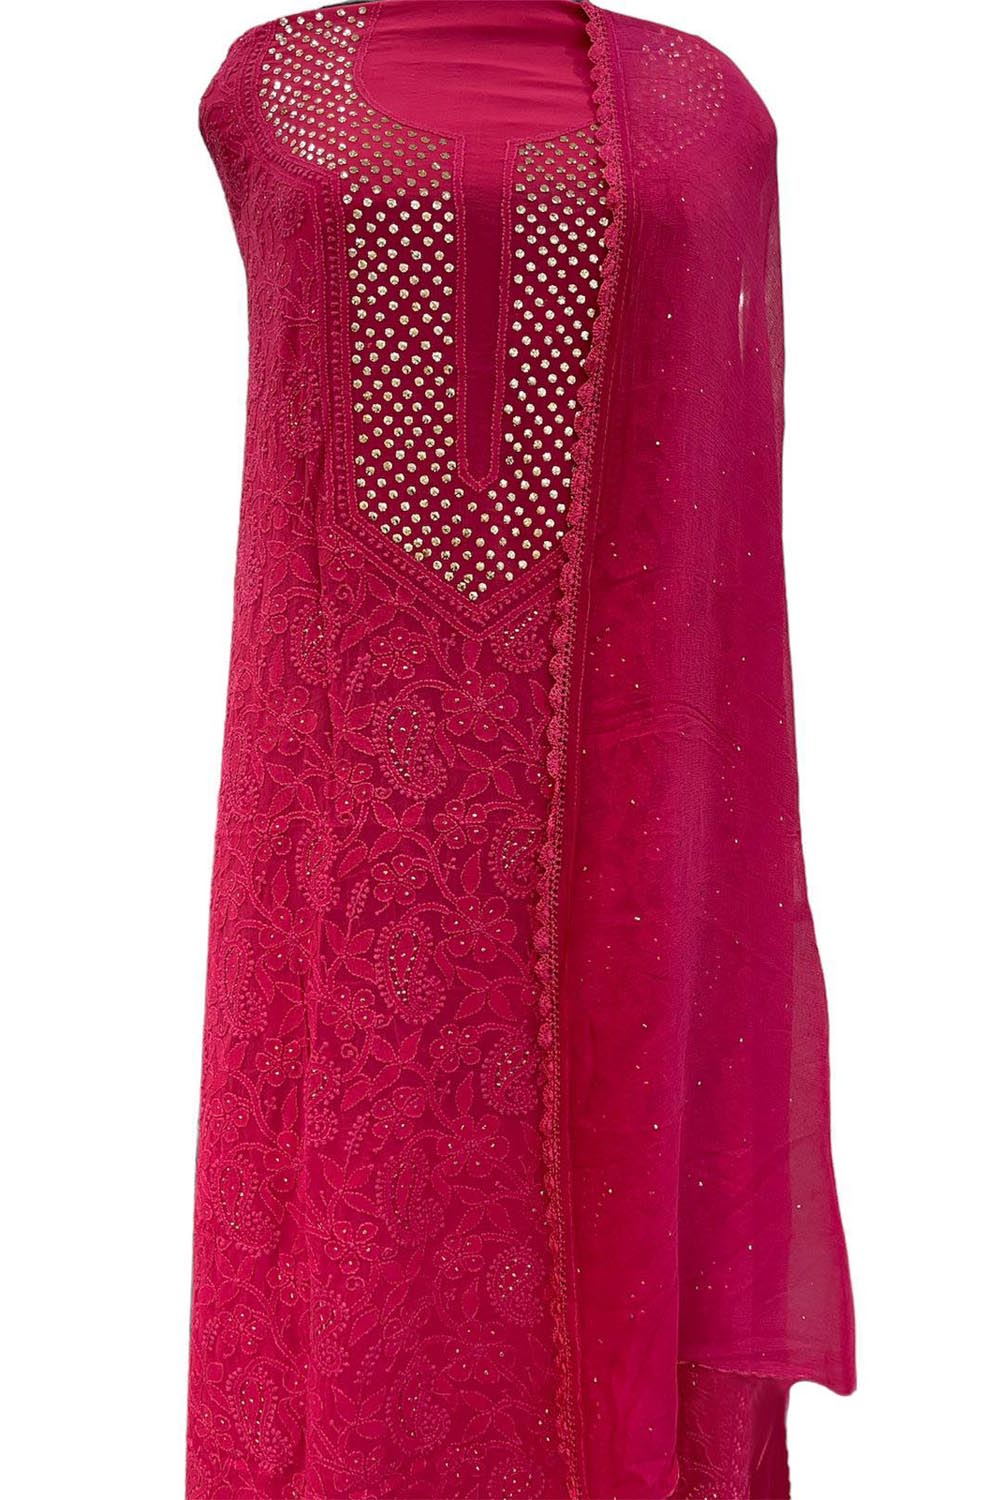 Exquisite Pink Chikankari Georgette Suit Set: Hand-Embroidered Elegance - Luxurion World